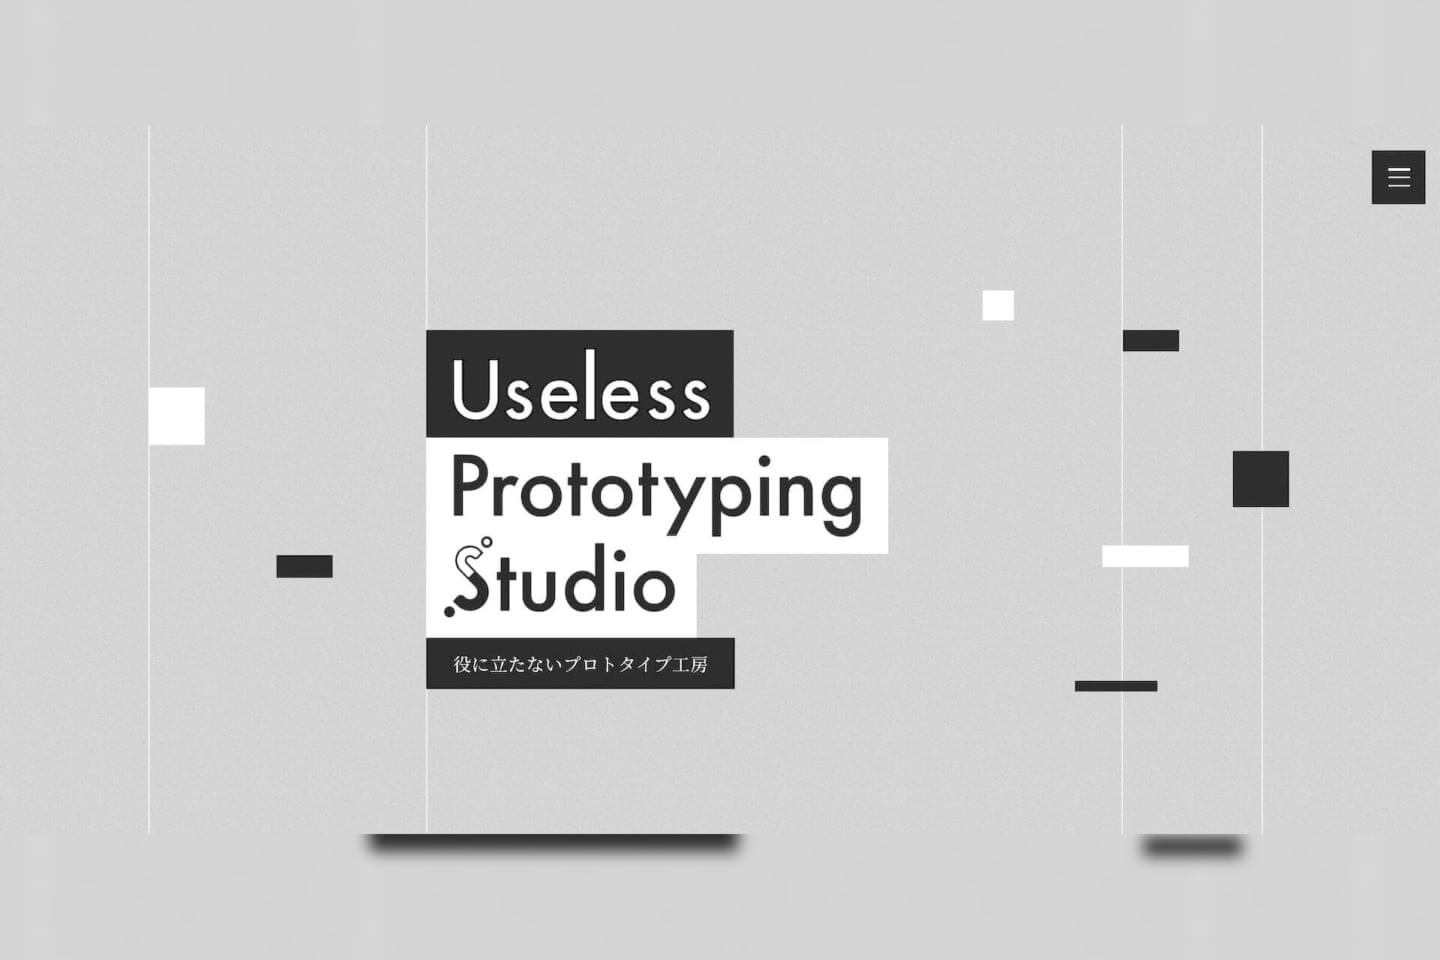 Useless Prototyping Studio